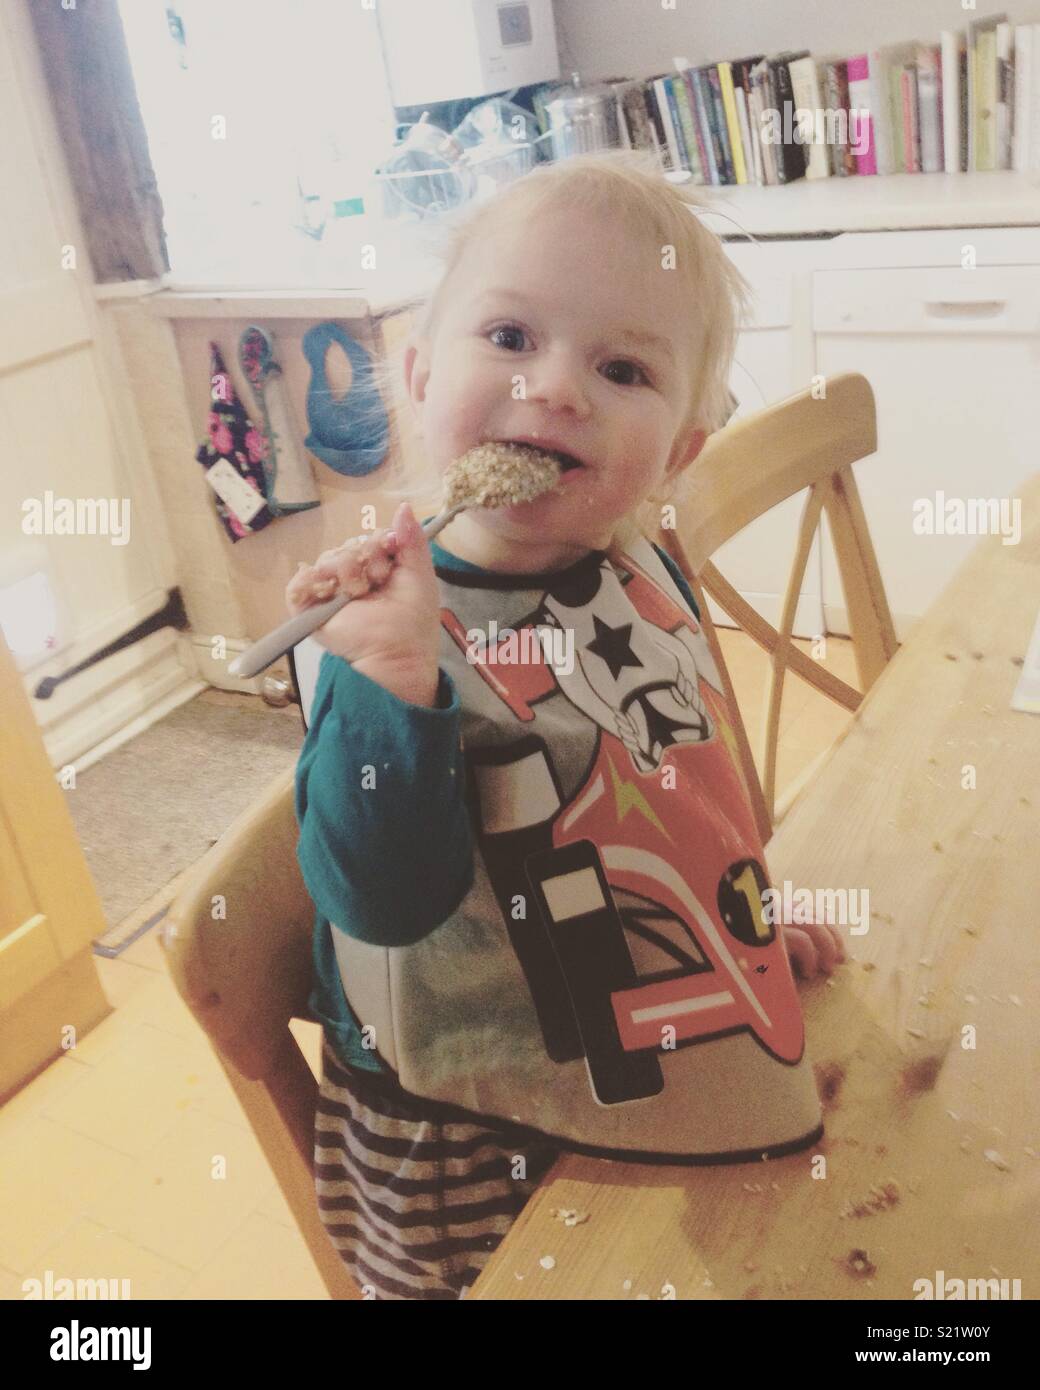 Baby eating porridge Stock Photo